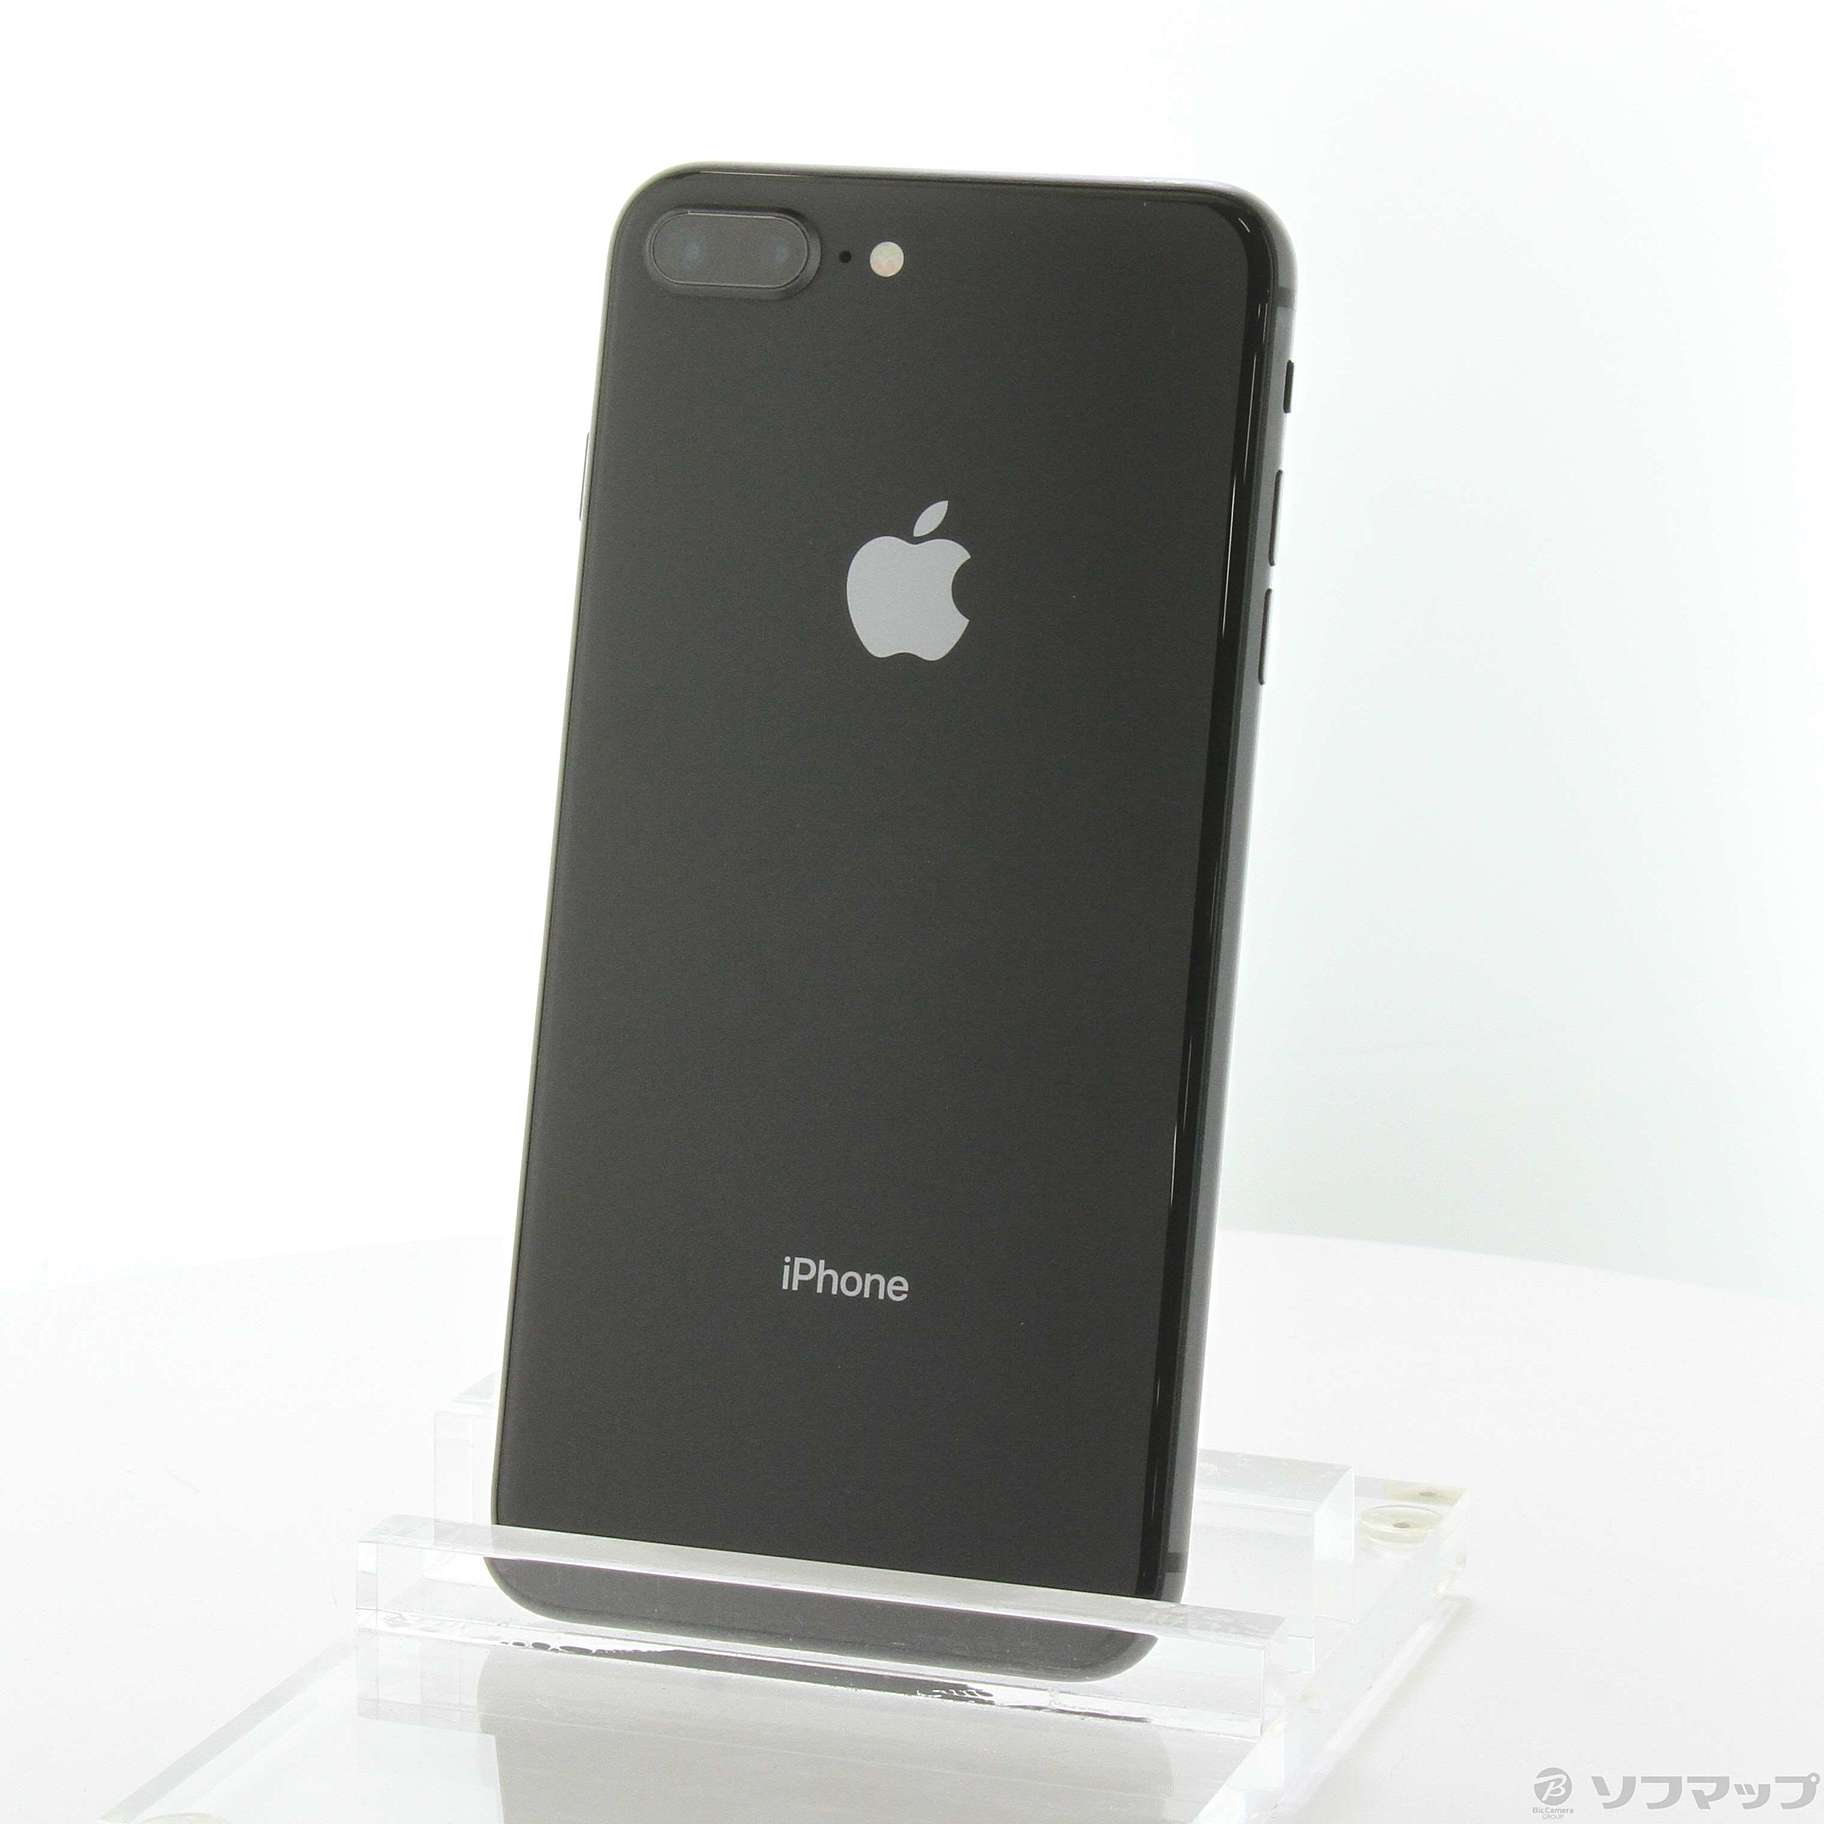 iPhone8 Plus 256GB SIMフリー スペースグレイ preludemusical.com.br